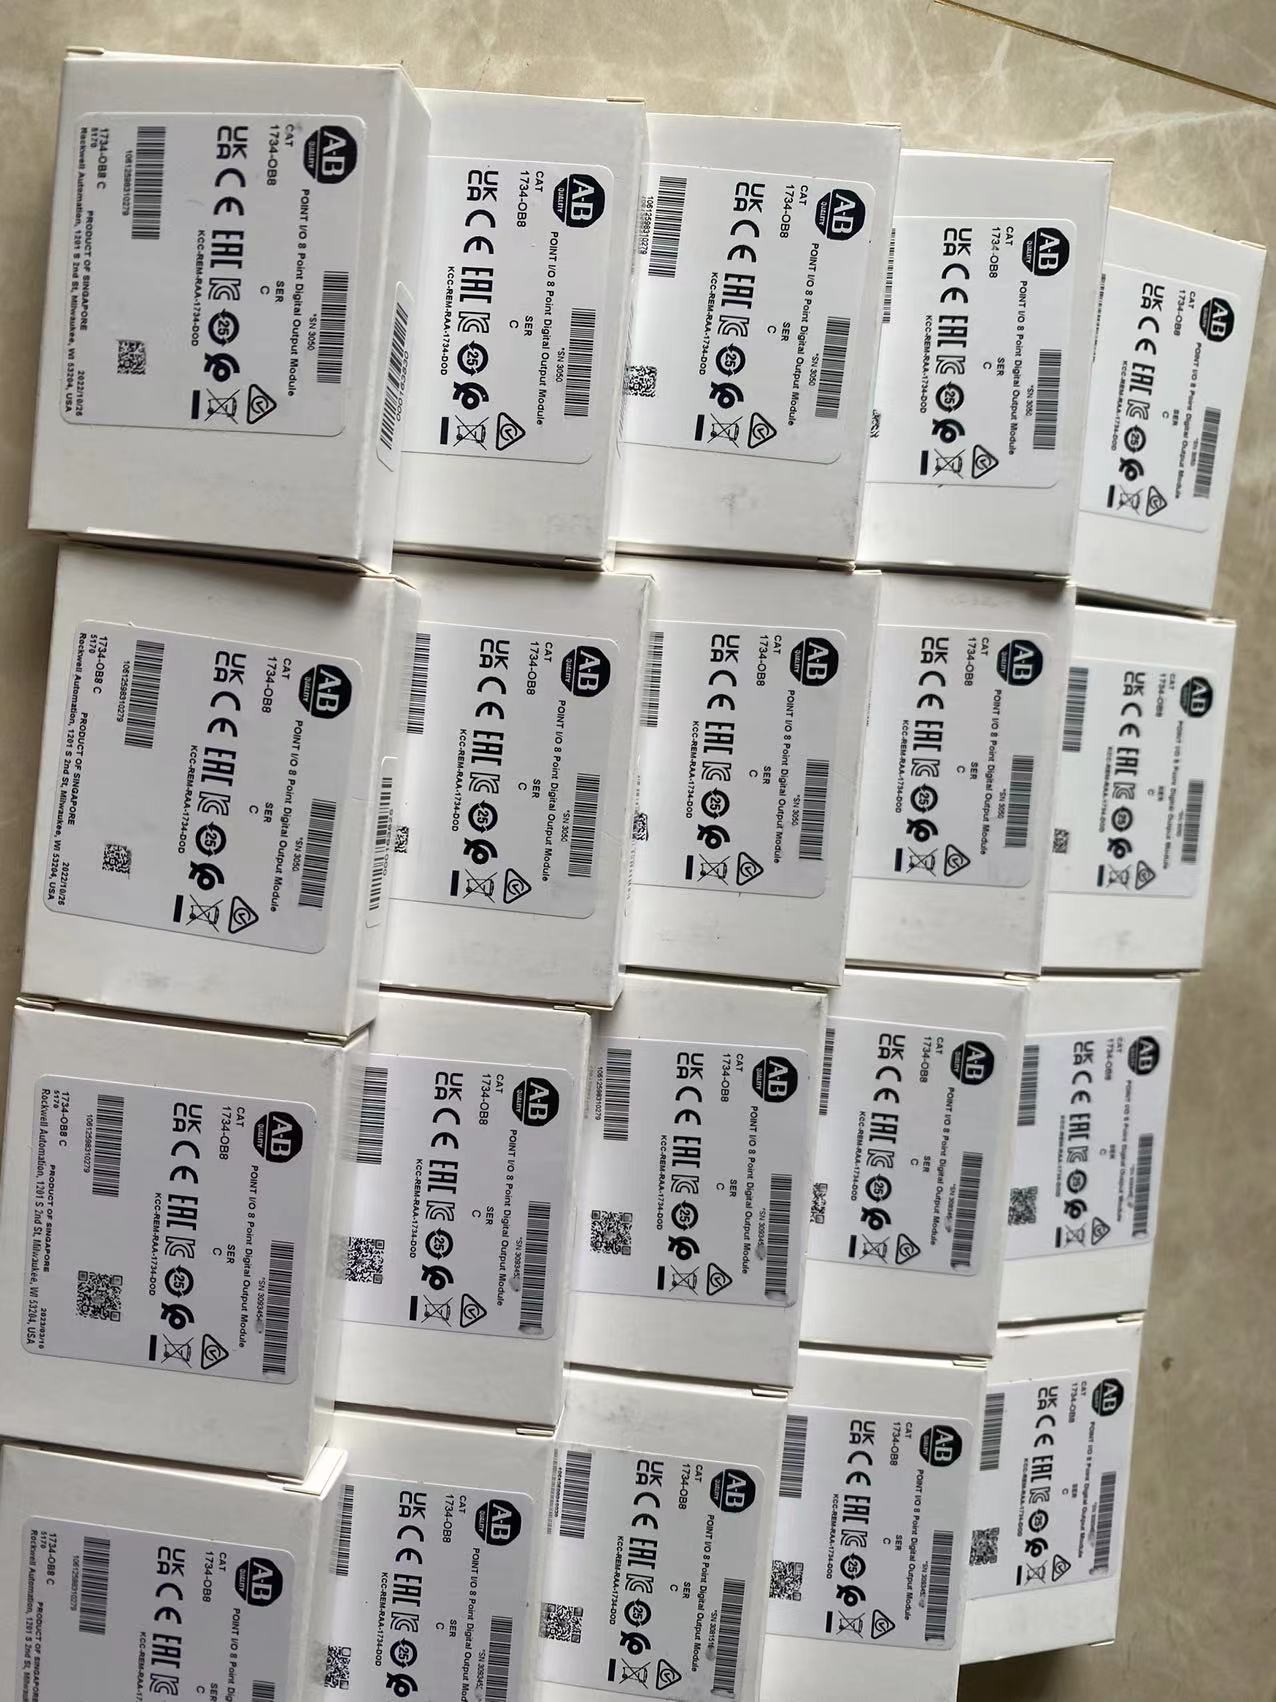 US$ 337.74 - New sealed Allen Bradley 1734-IB8SK POINT Digital Input 24V DC  8-Ch Safety-Rated - m. - plc manufacturers, PLC supplier,  PLC distributor